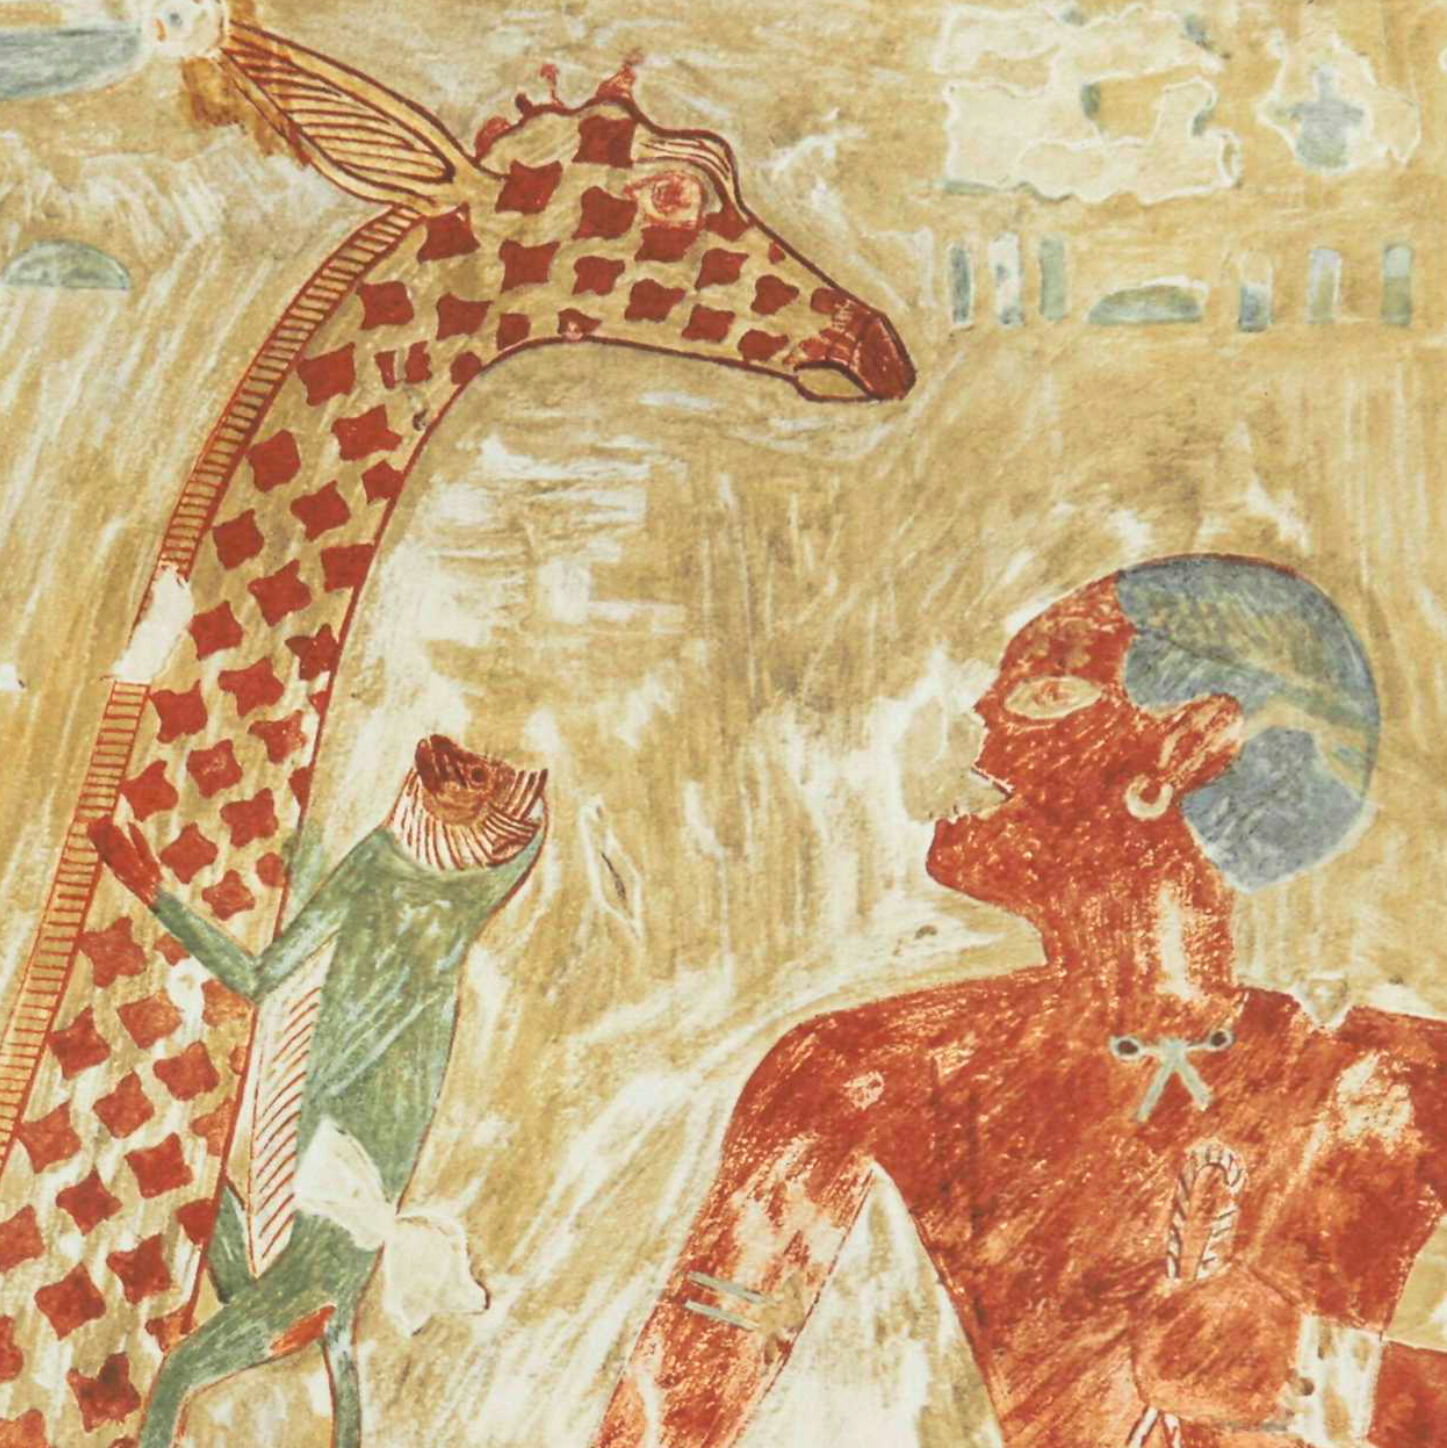 Theban Necropolis, Tomb of Rekhmire (TT 100), Wall painting, color presentation